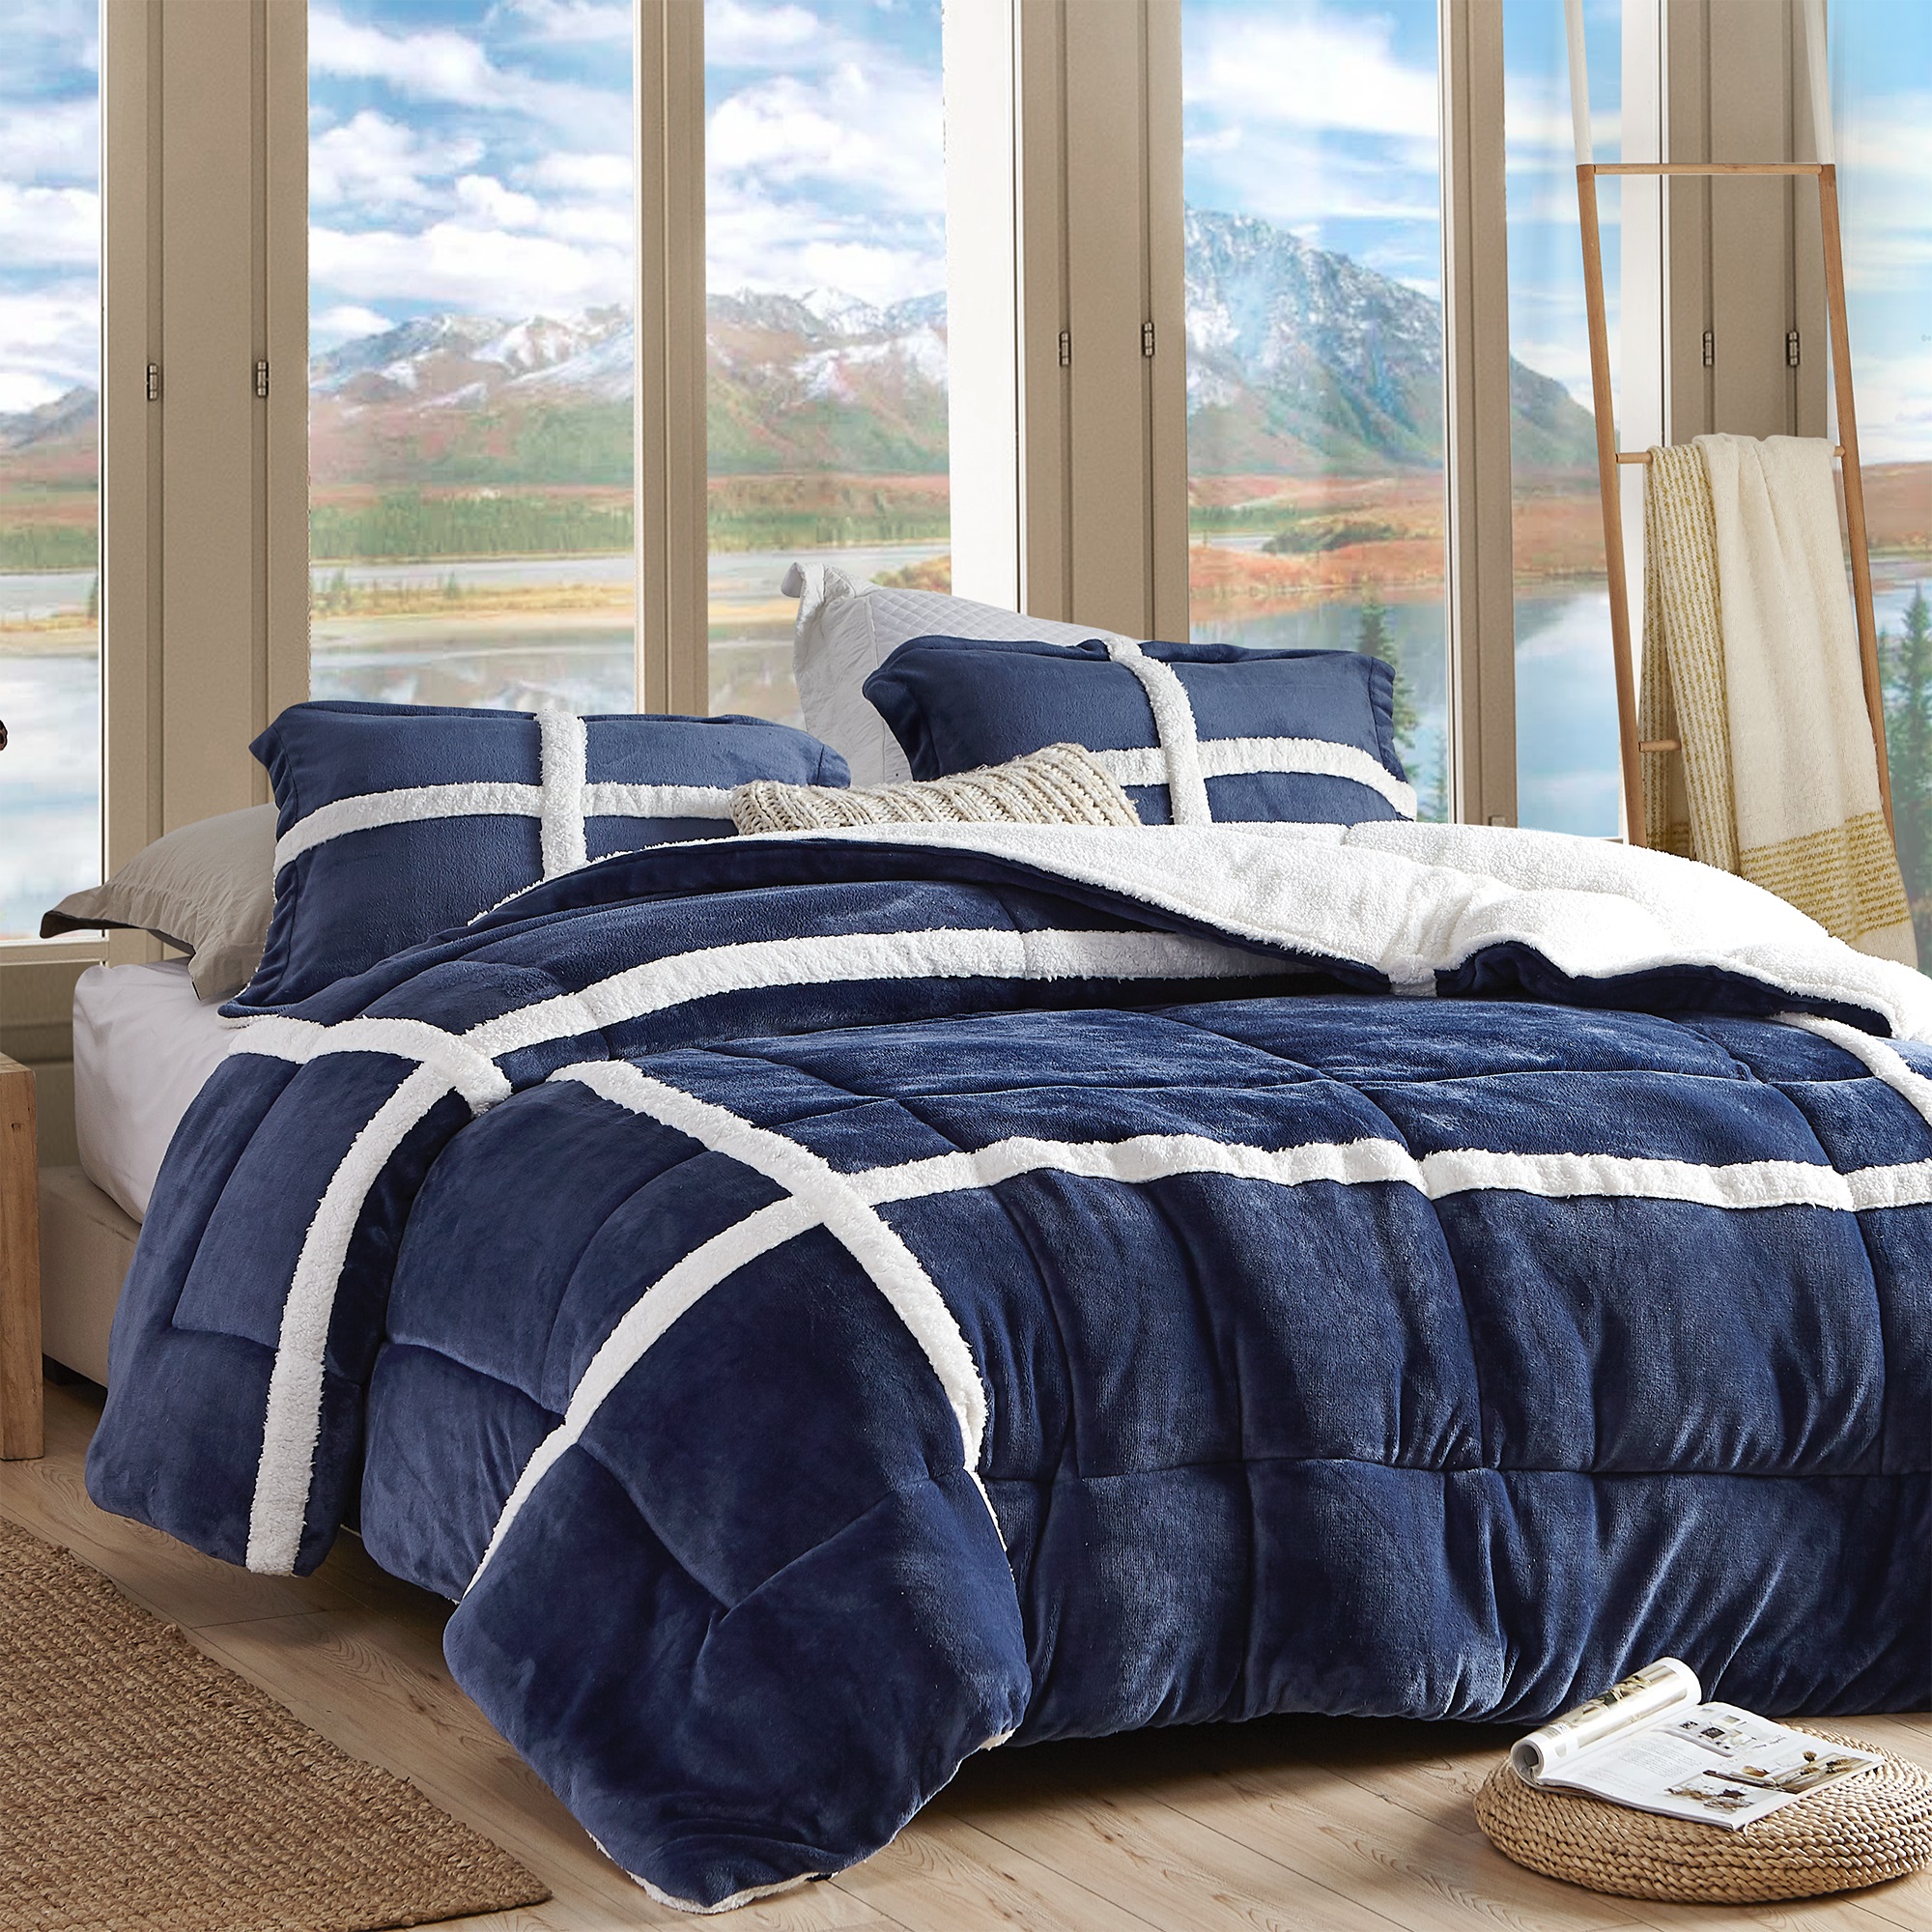 Coma Inducer Oversized Comforter - Wilderness - Navy